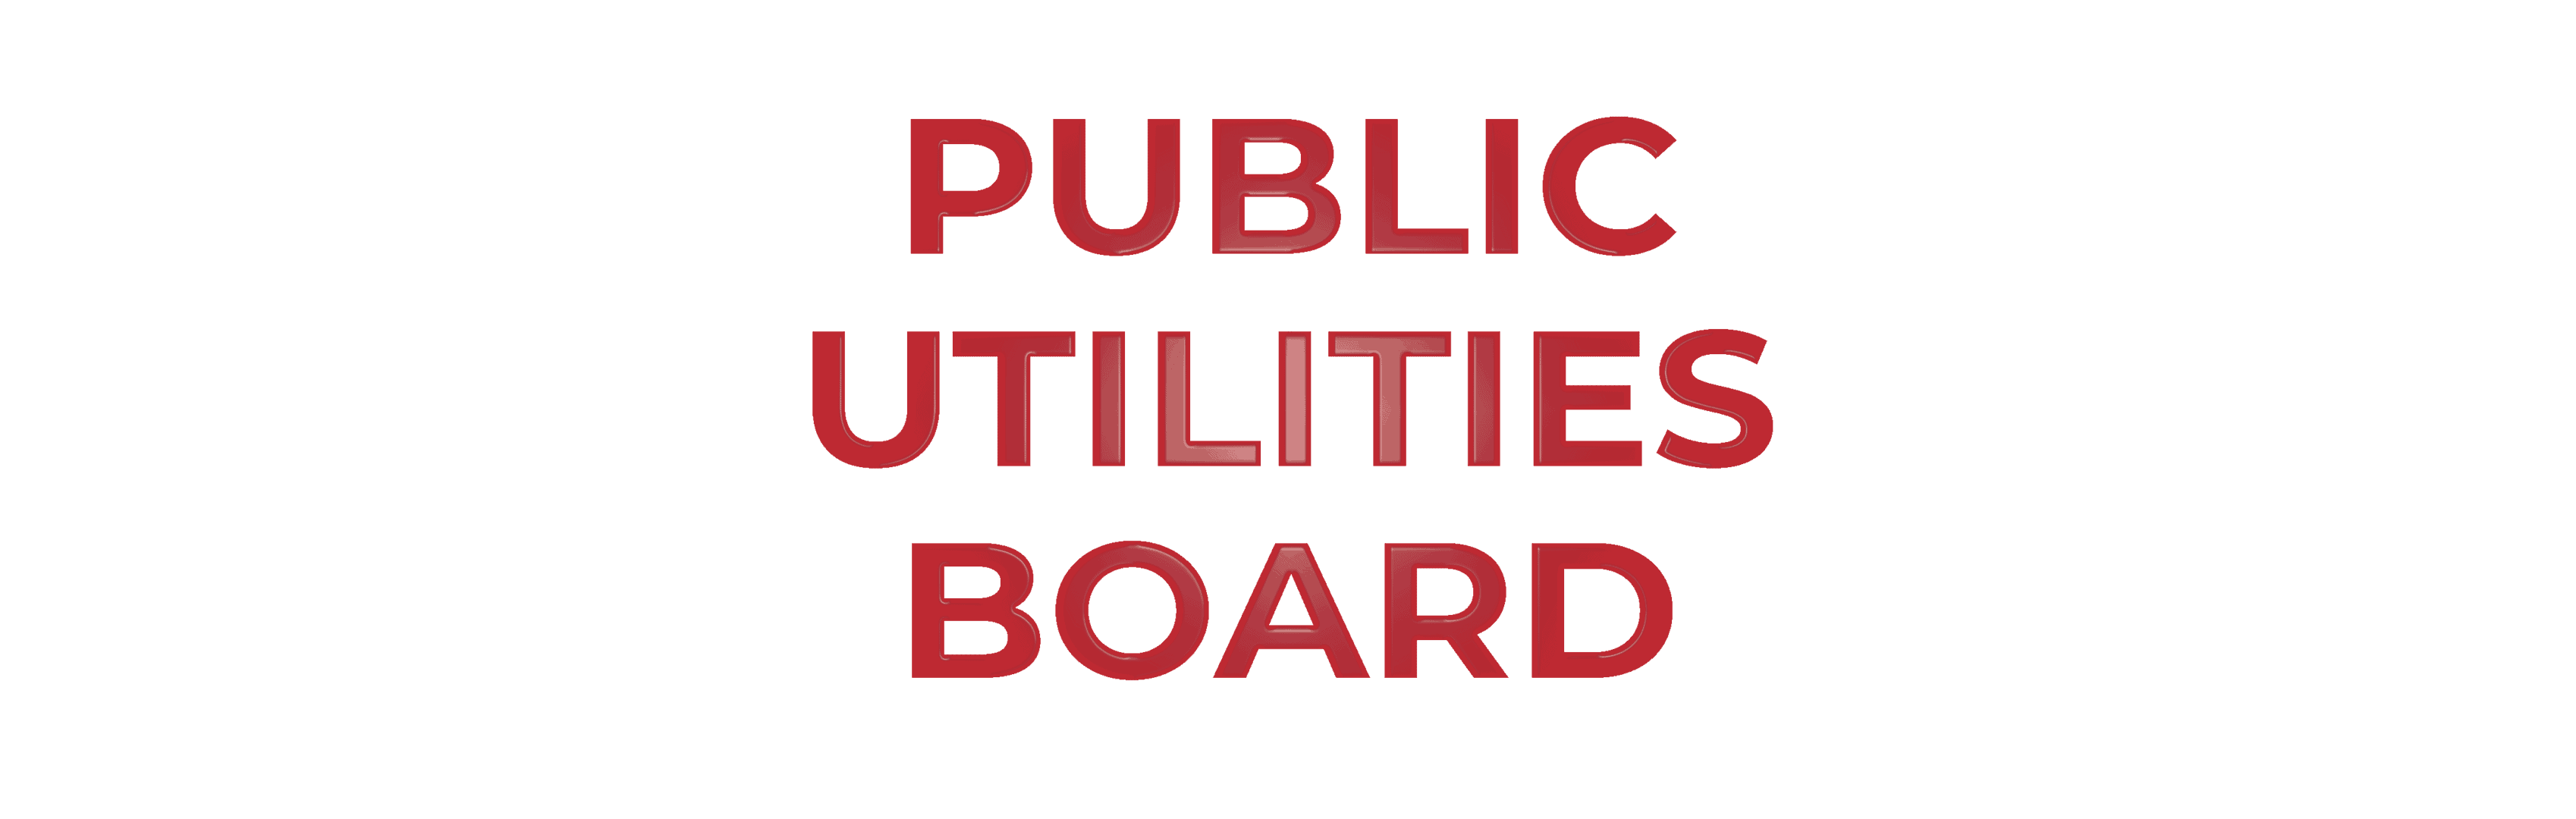 Public Utilities Board (Client)